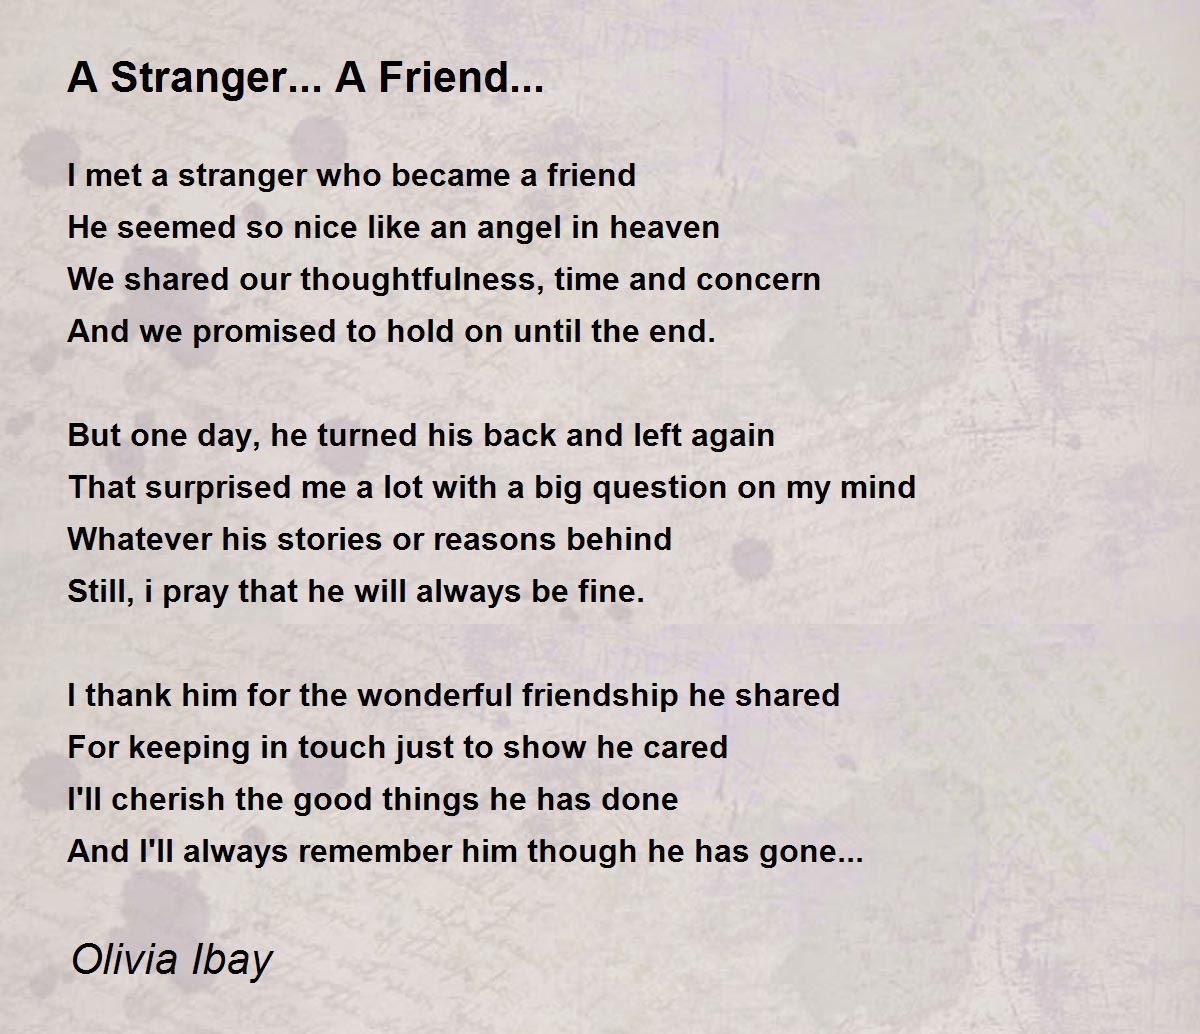 A Stranger A Friend - A Stranger A Friend Poem by Olivia Ibay